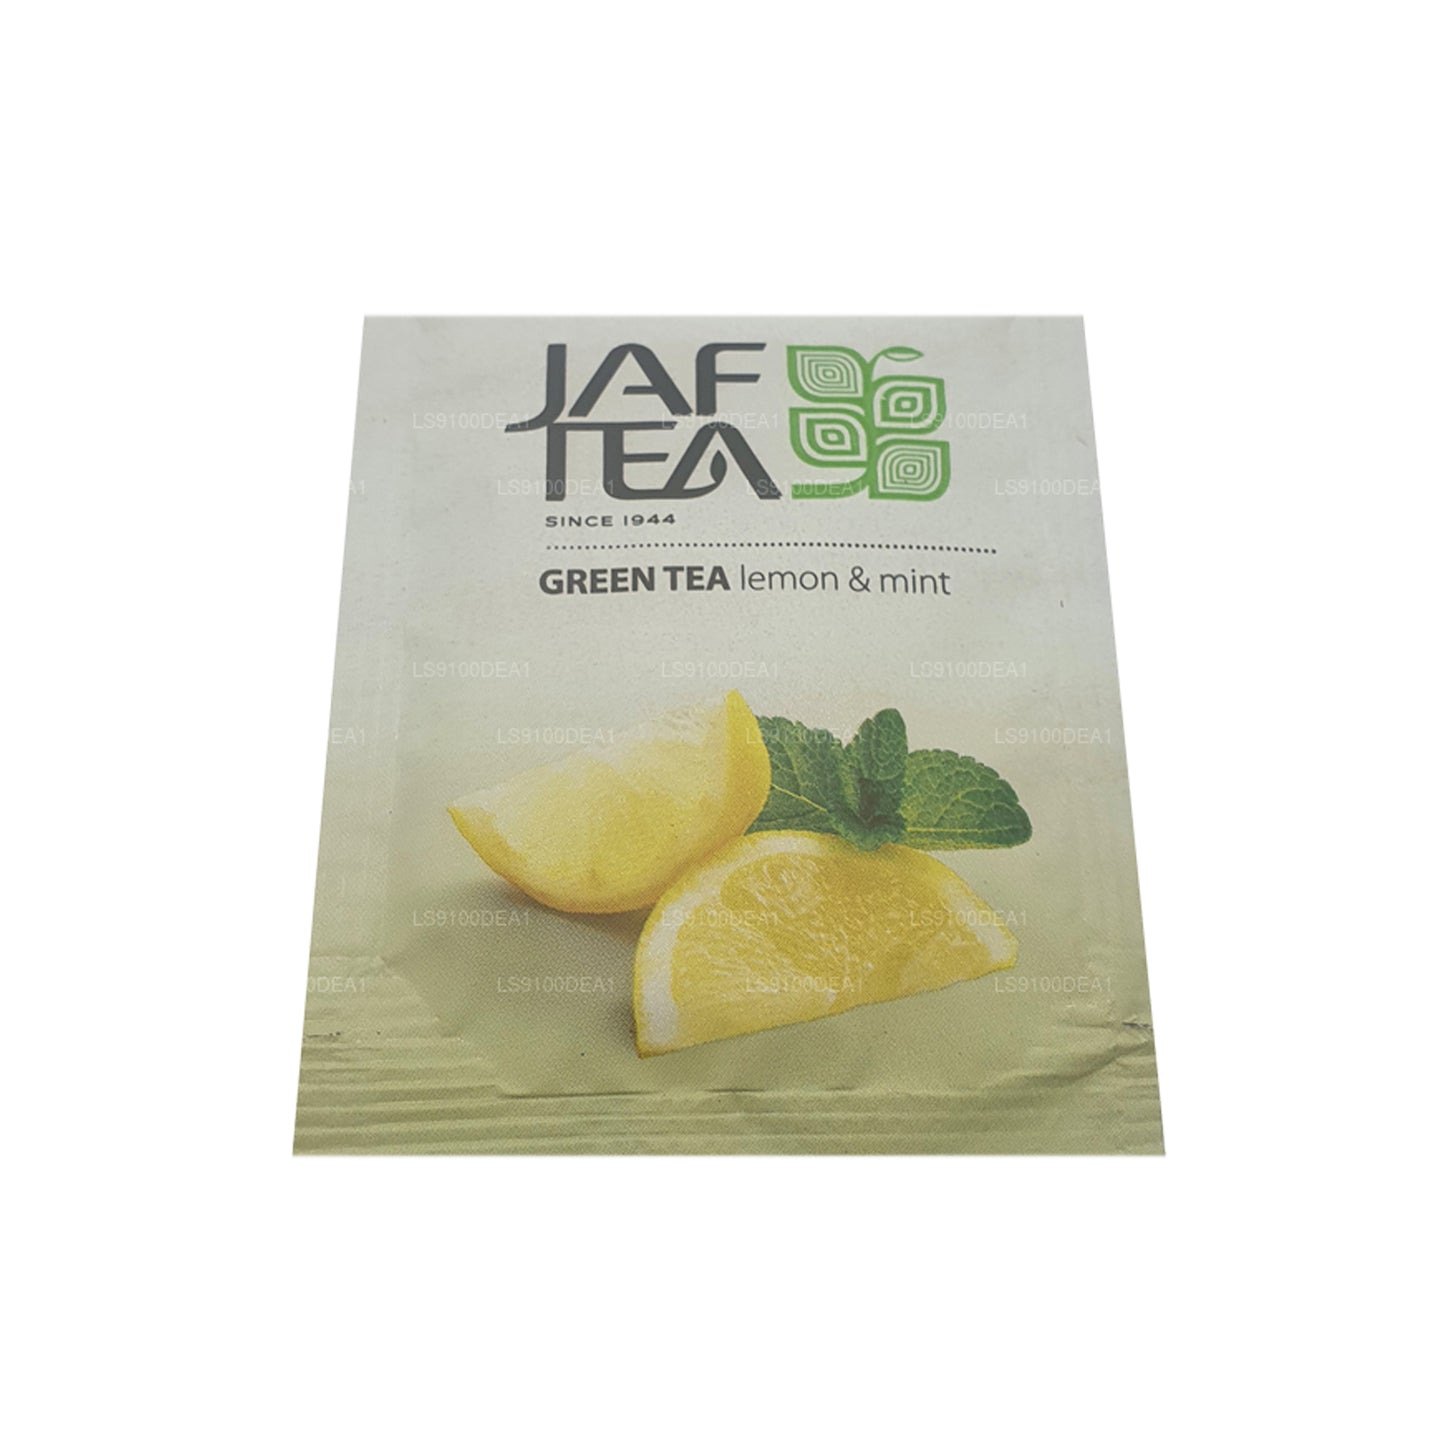 Jaf te ren grön samling (160g) 80 tepåsar